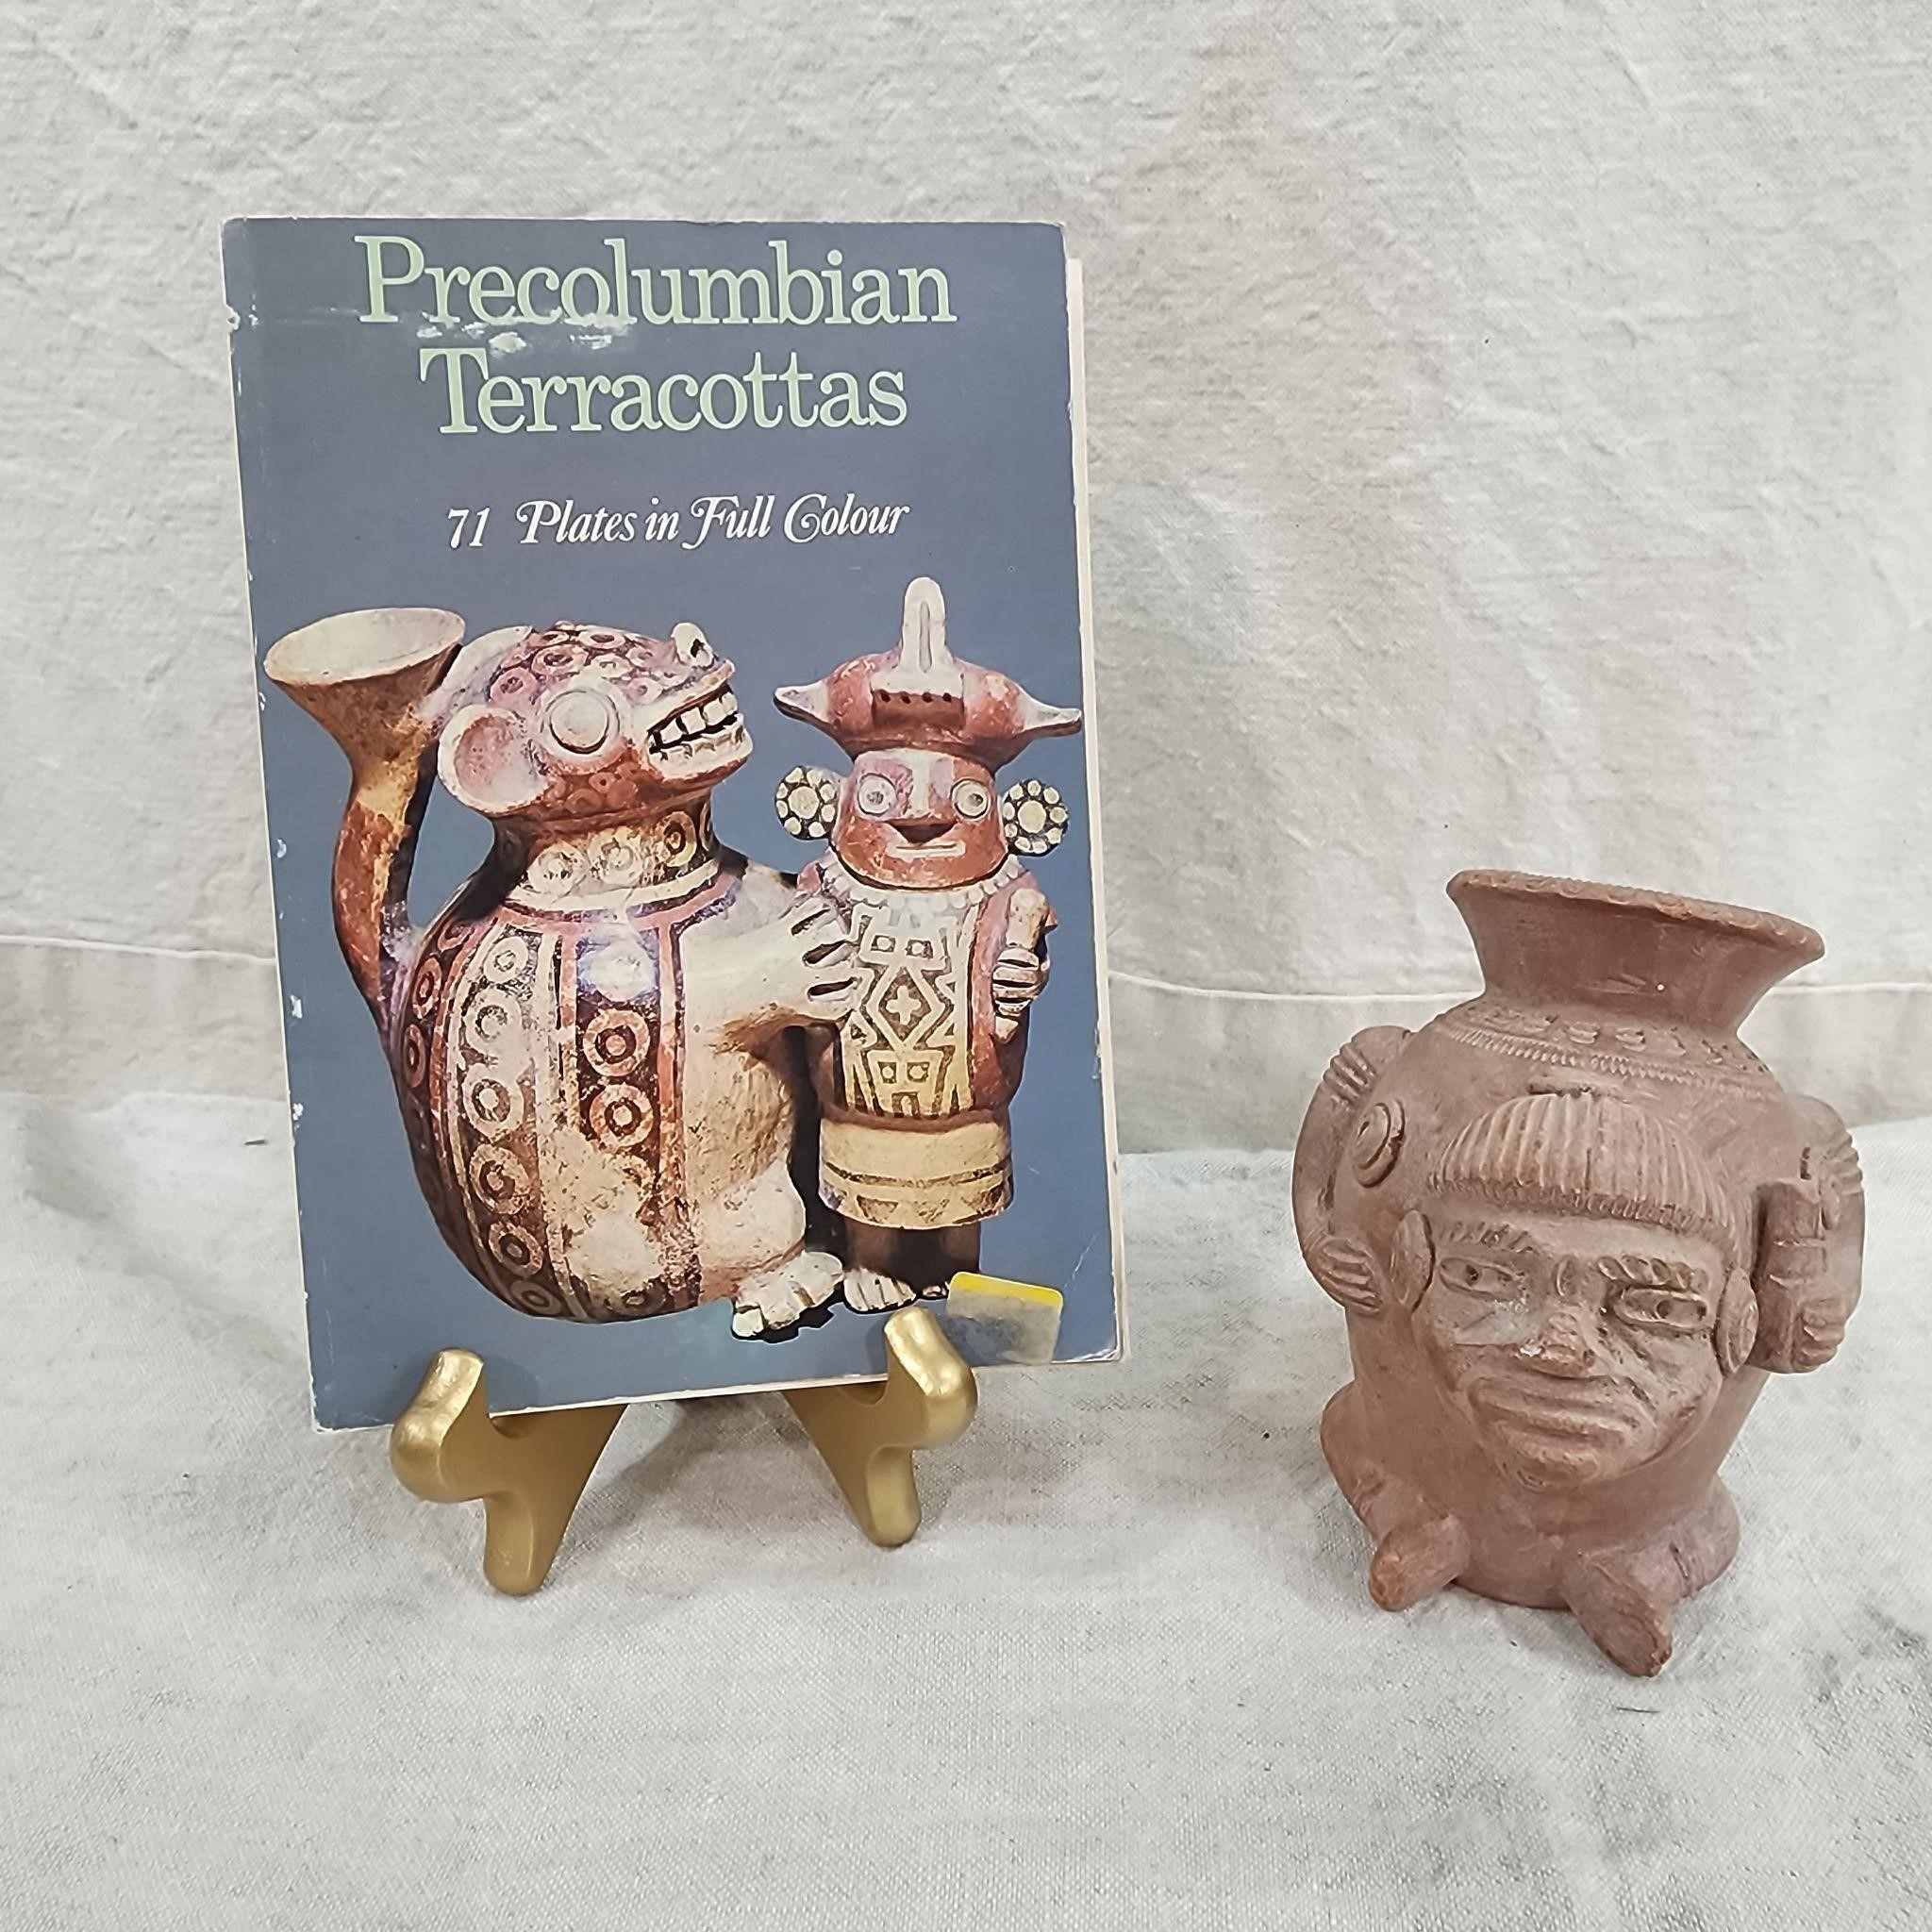 Pre Columbian like vessel souvenir w/ book